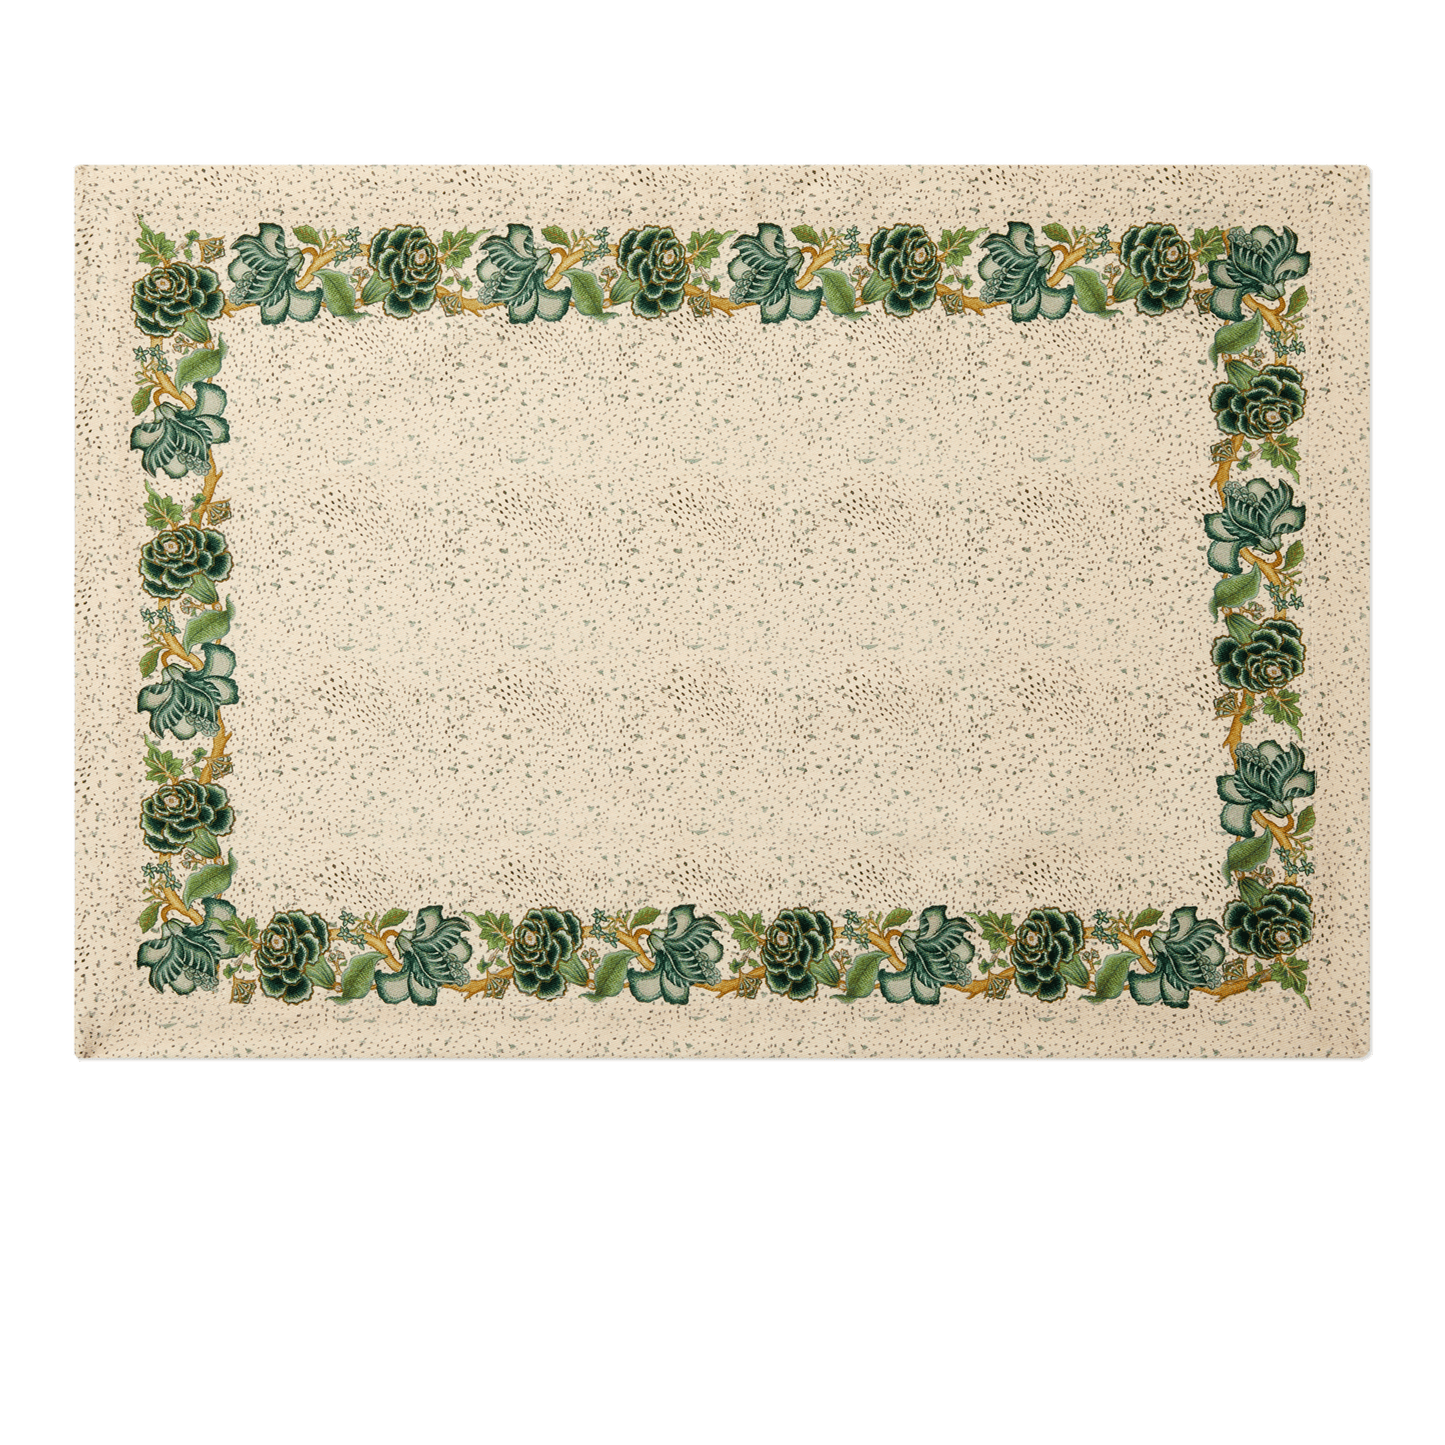 4-Piece Rectangular Placemat Set in Jardin Green Floral Cotton